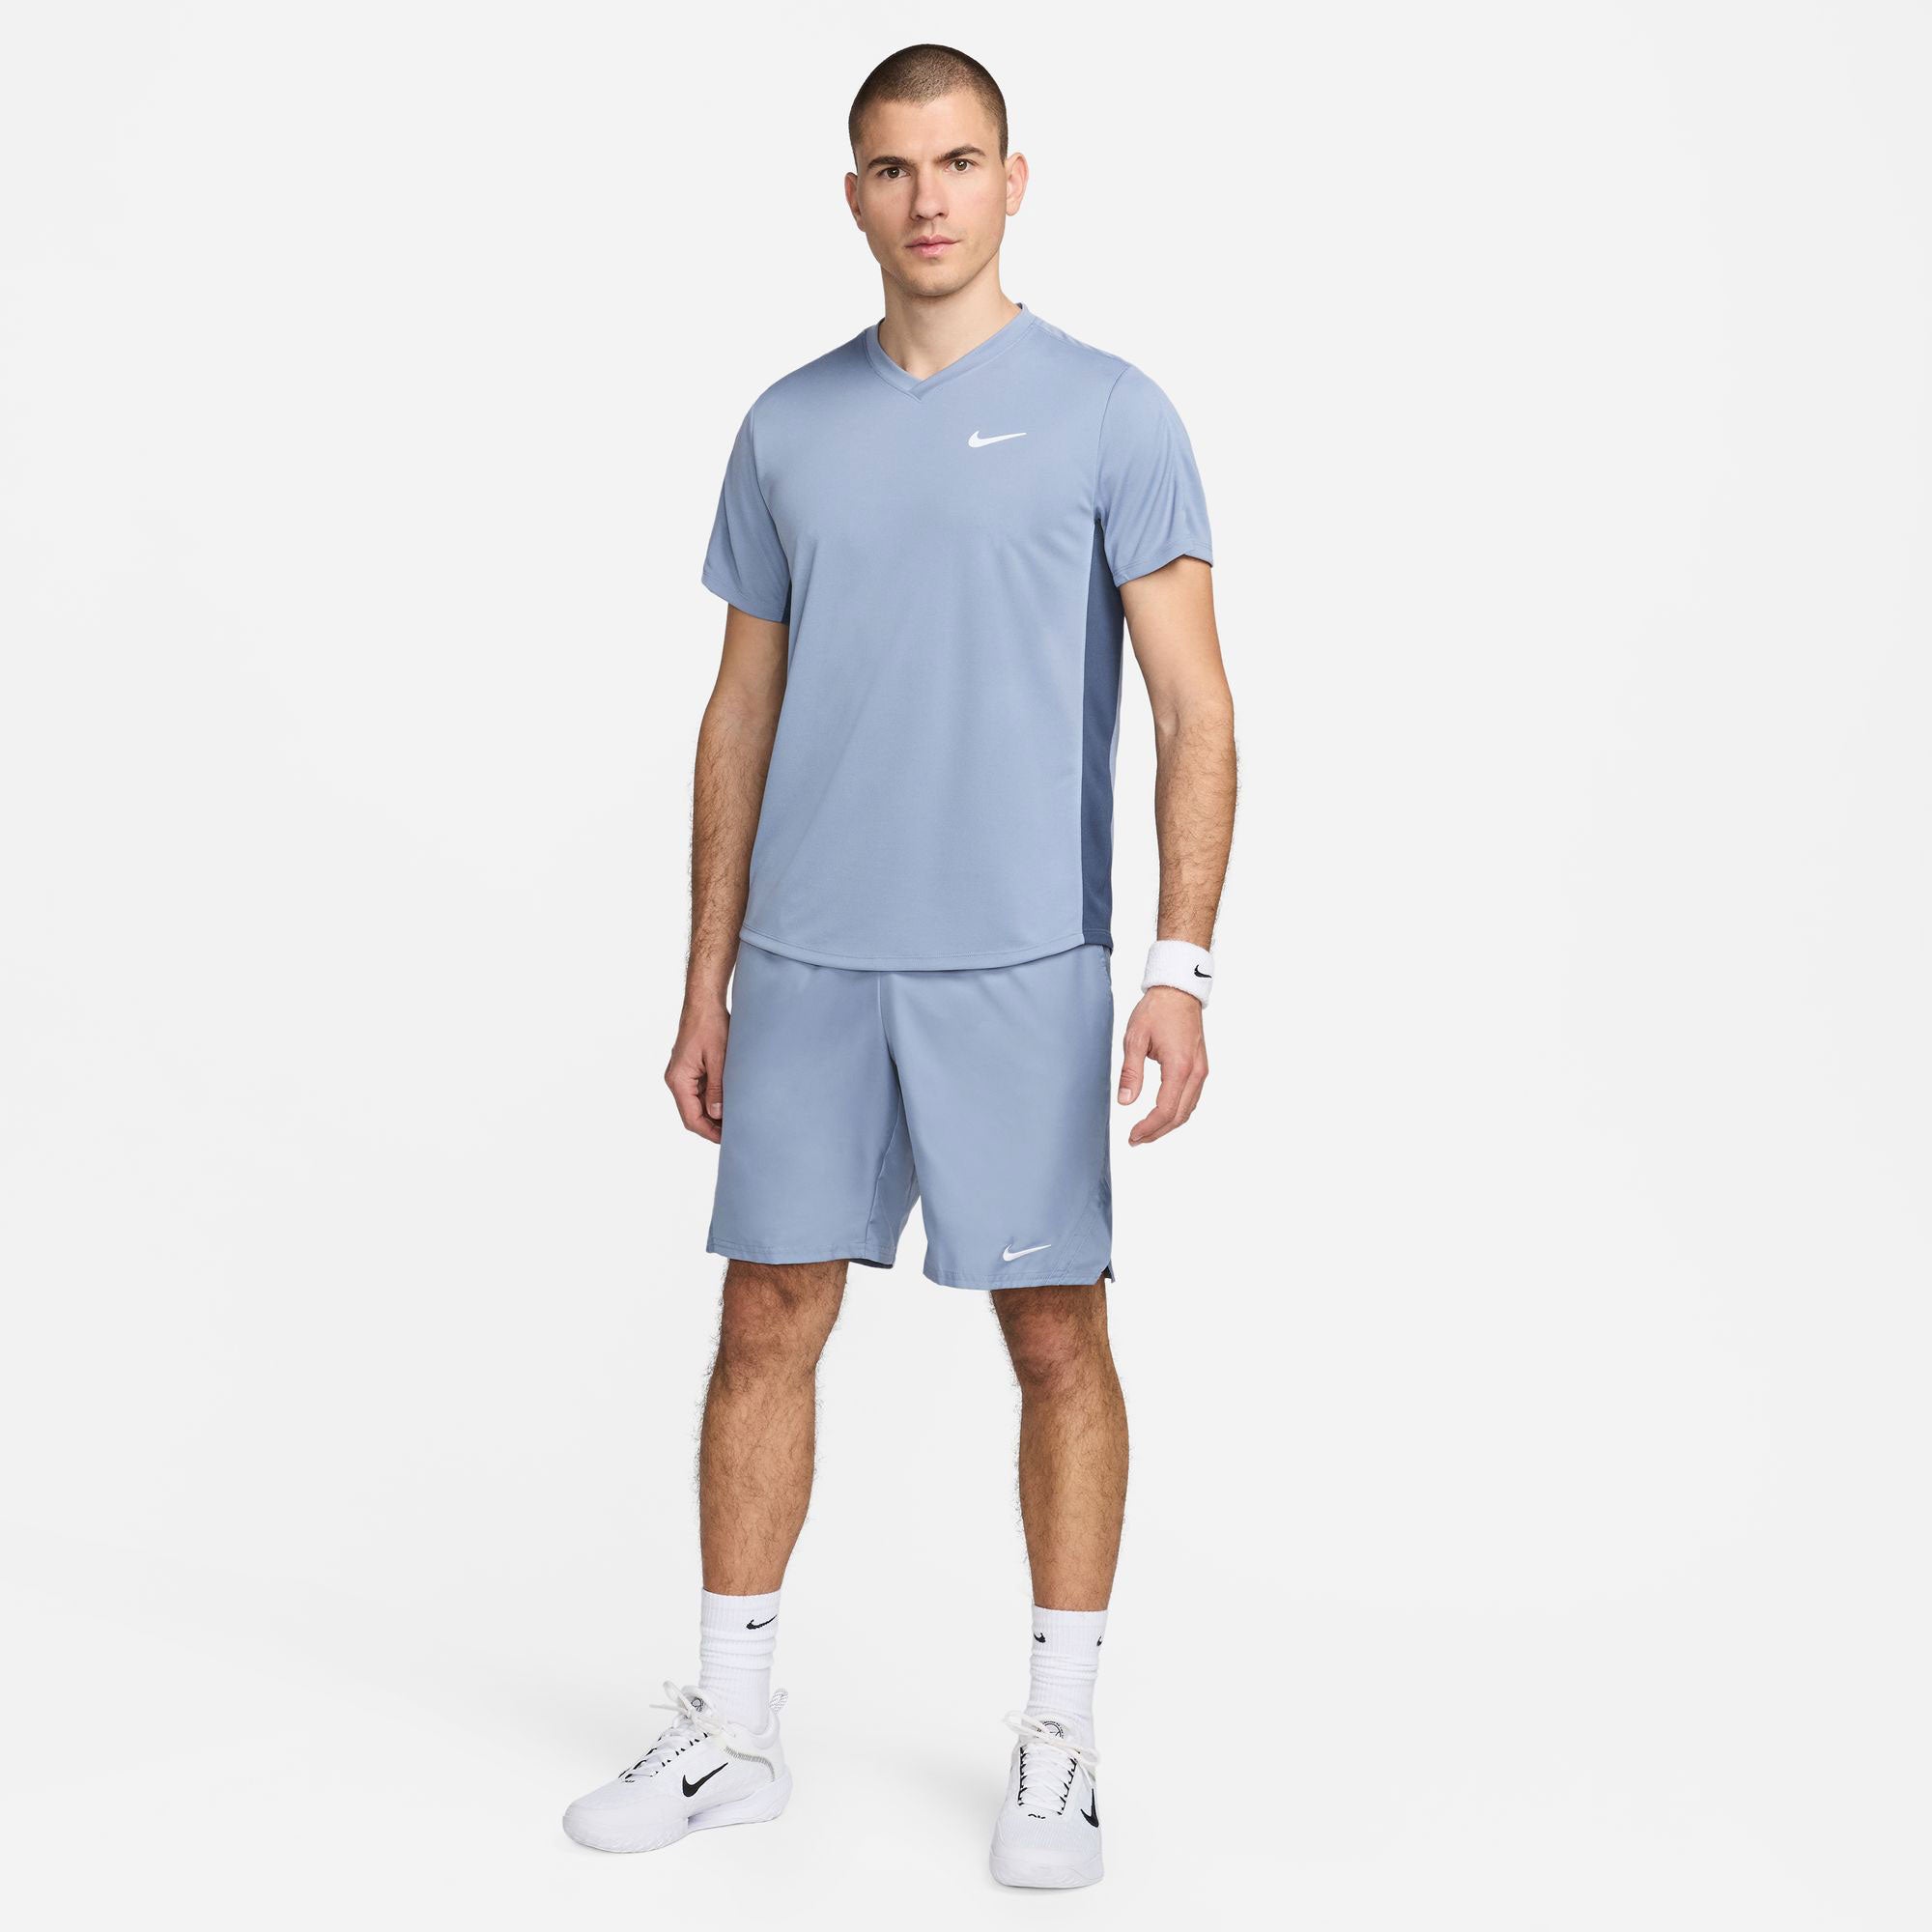 NikeCourt Victory Men's Dri-FIT Tennis Shirt - Blue (5)